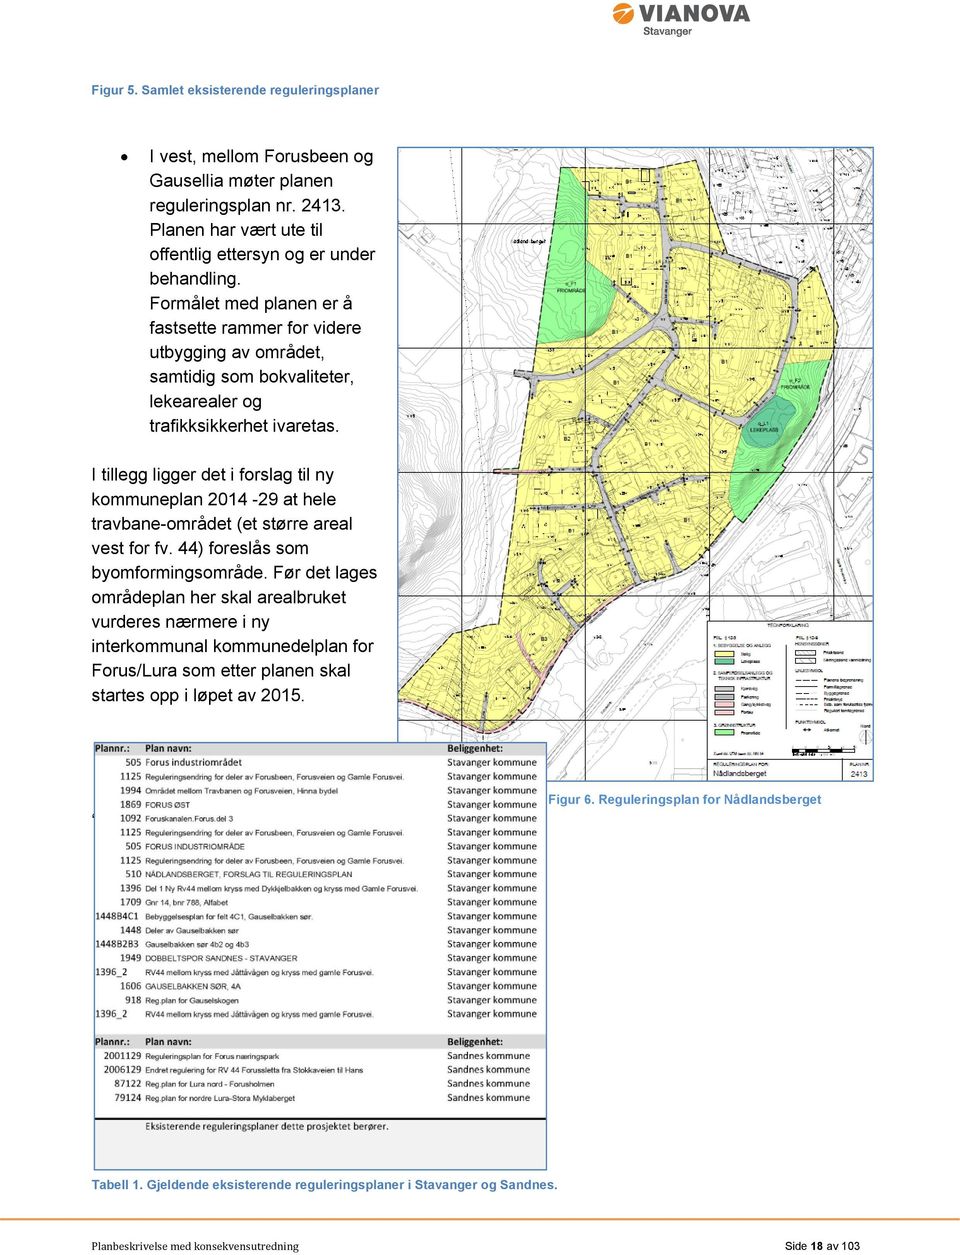 I tillegg ligger det i forslag til ny kommuneplan 2014-29 at hele travbane-området (et større areal vest for fv. 44) foreslås som byomformingsområde.